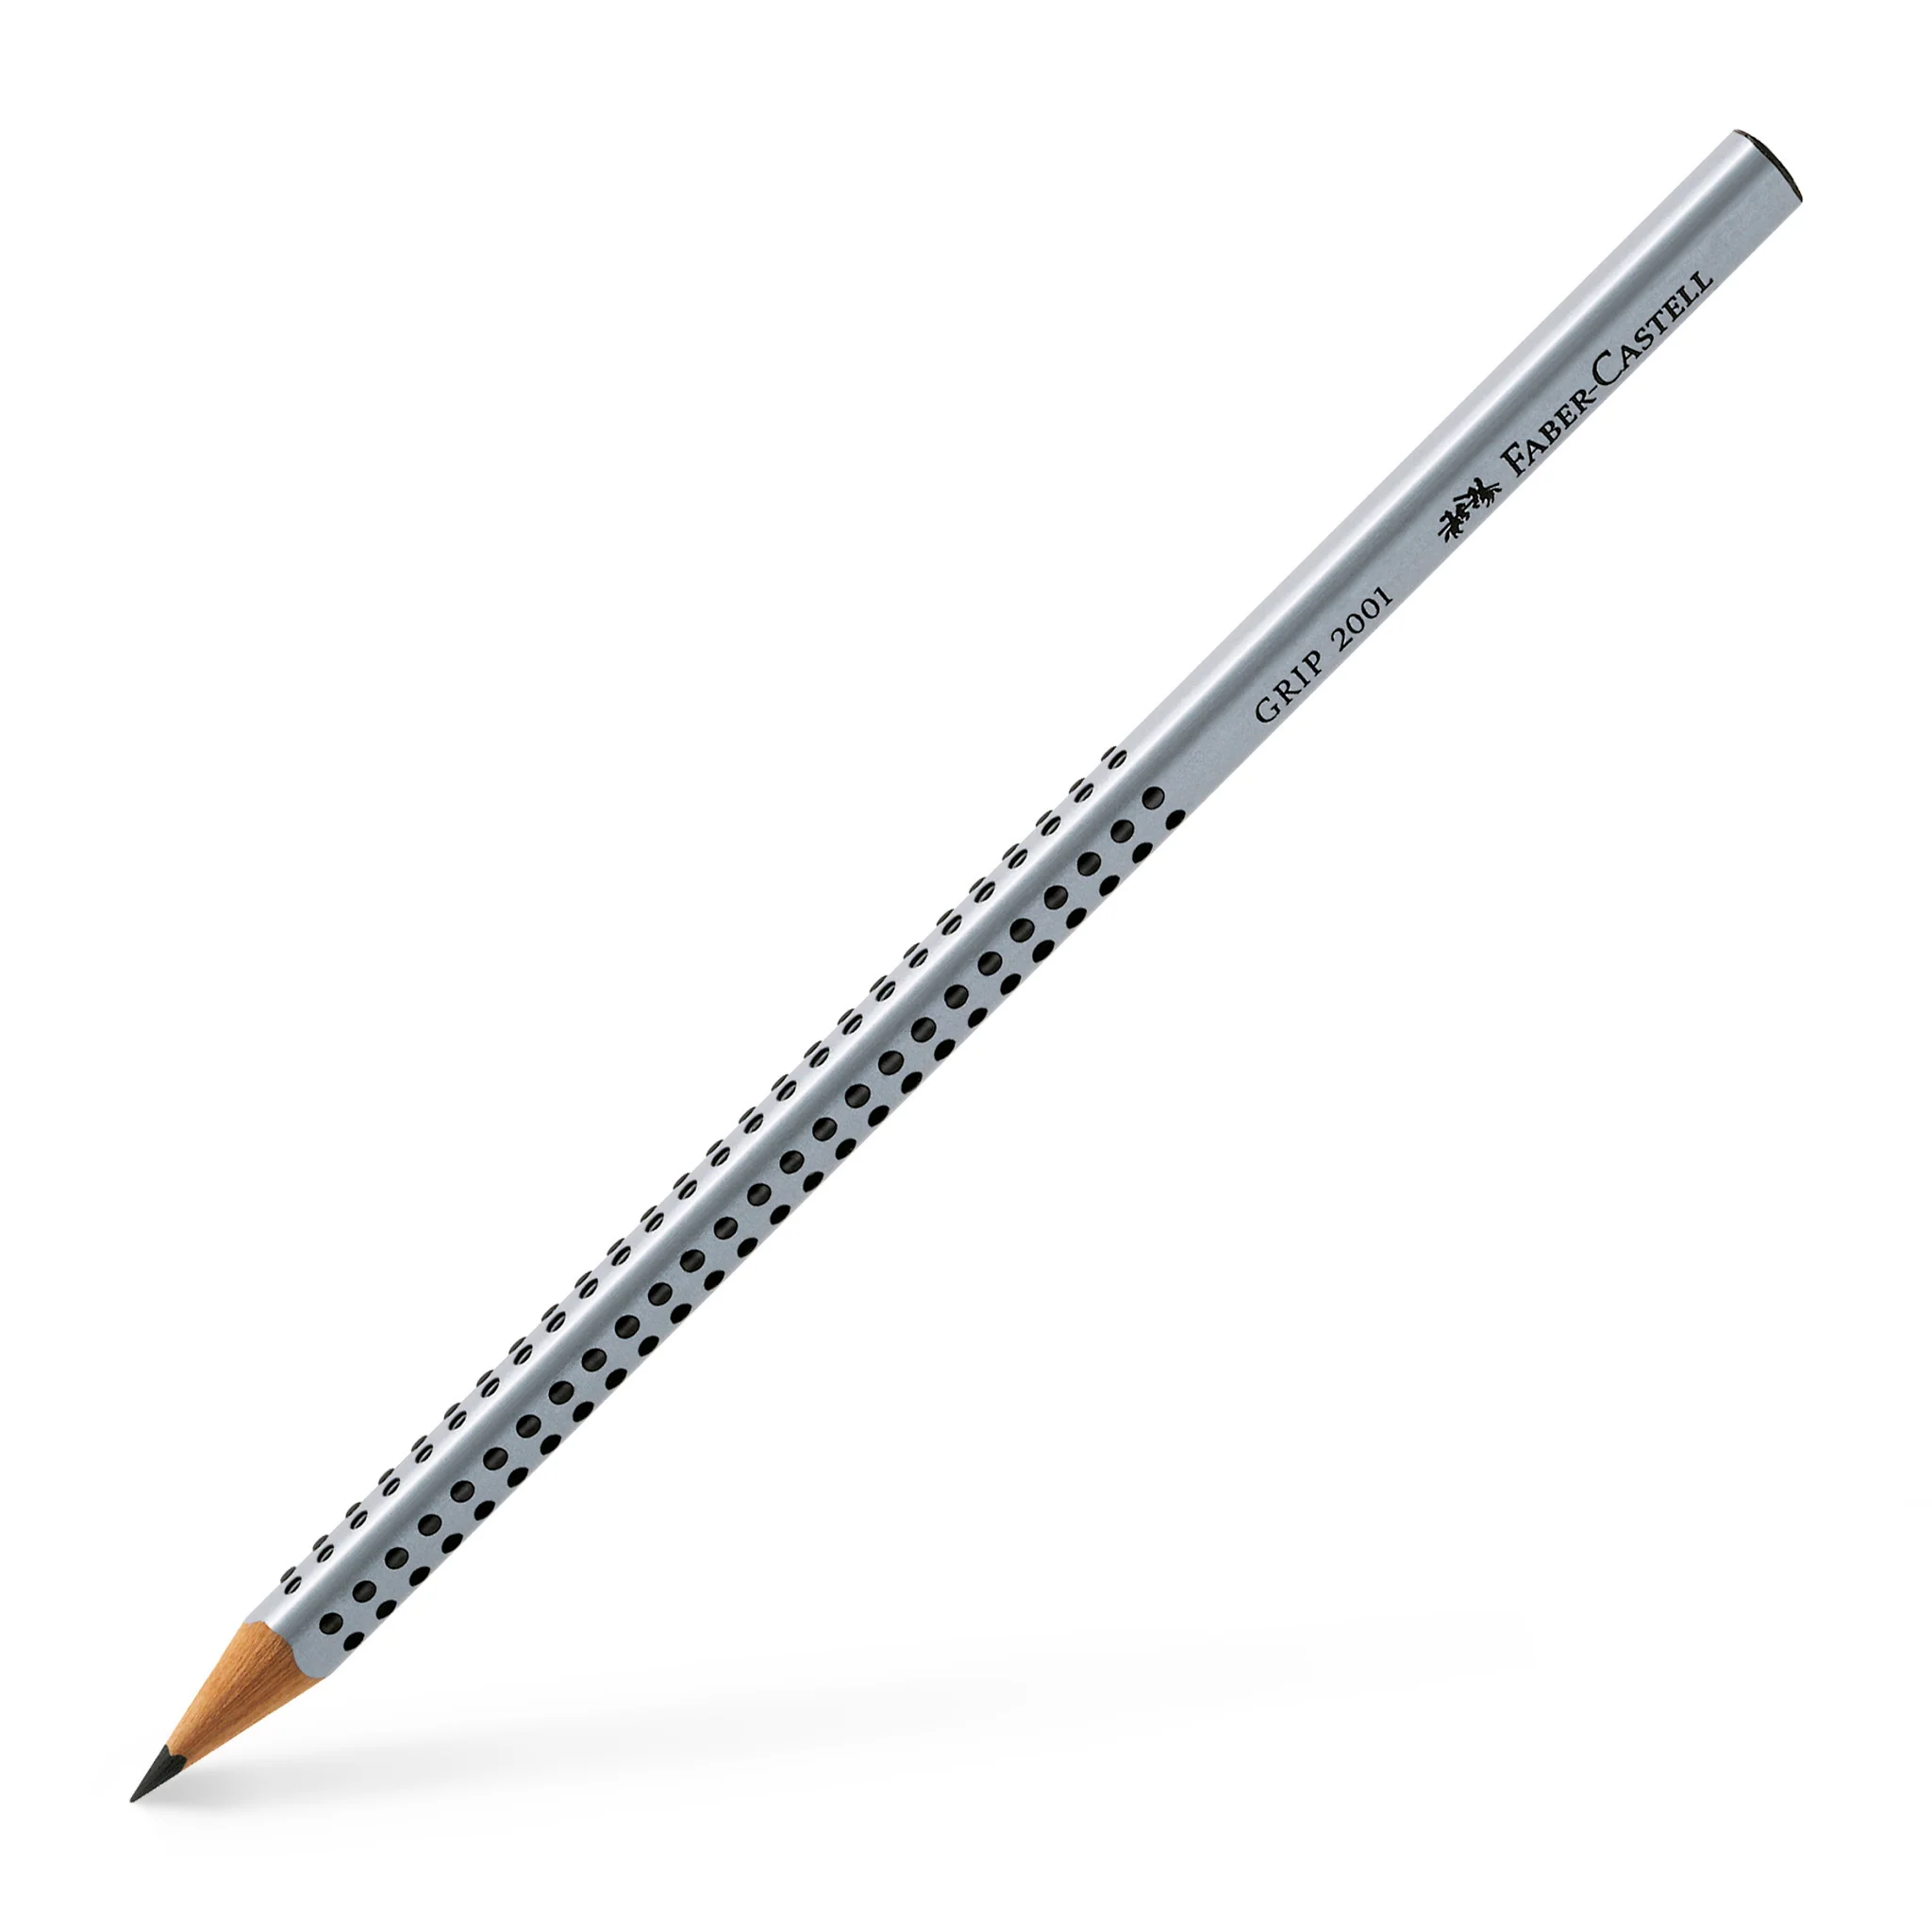 Image shows a faber-castell graphite pencil